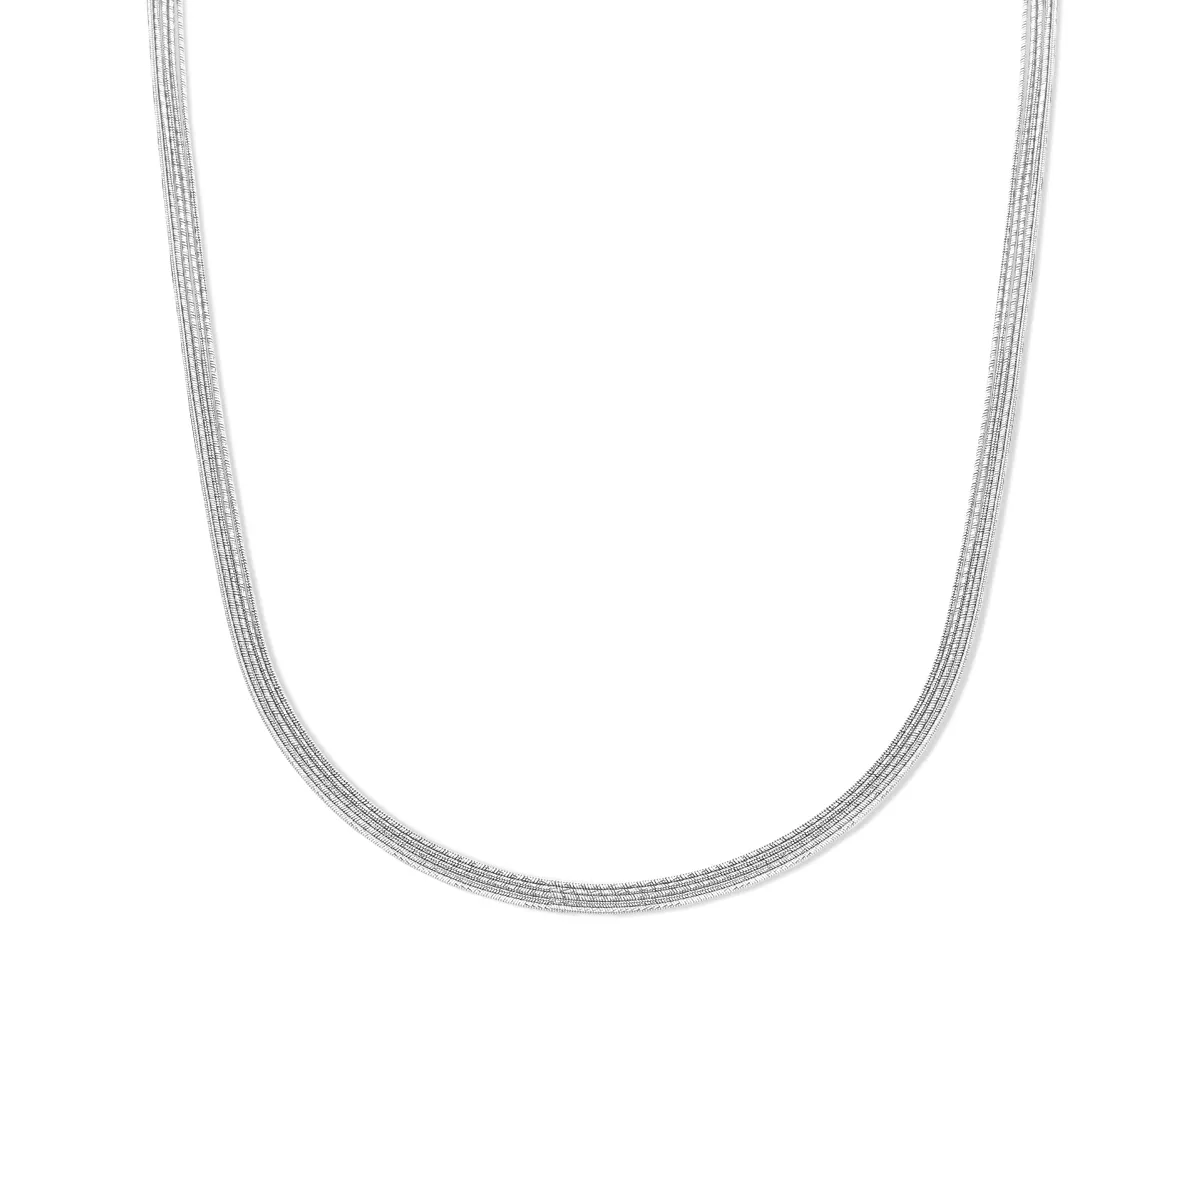 Multi-ketting Slangschakel zilver 0,9 mm 40 + 5 cm